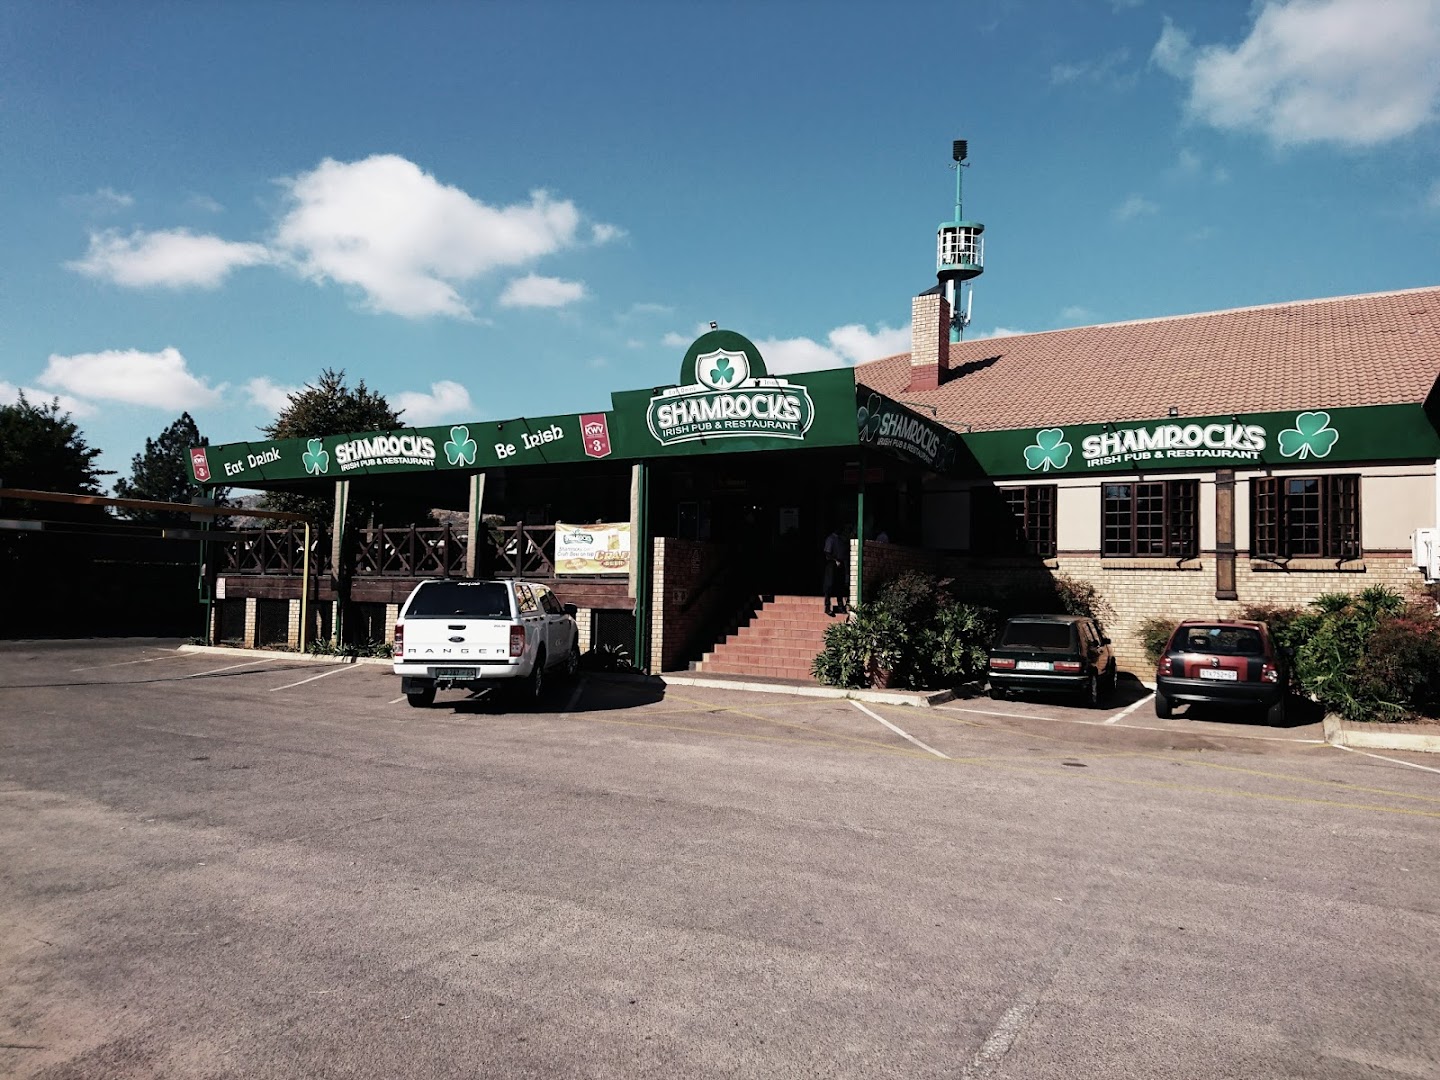 Shamrocks – Irish Pub and Restaurant.